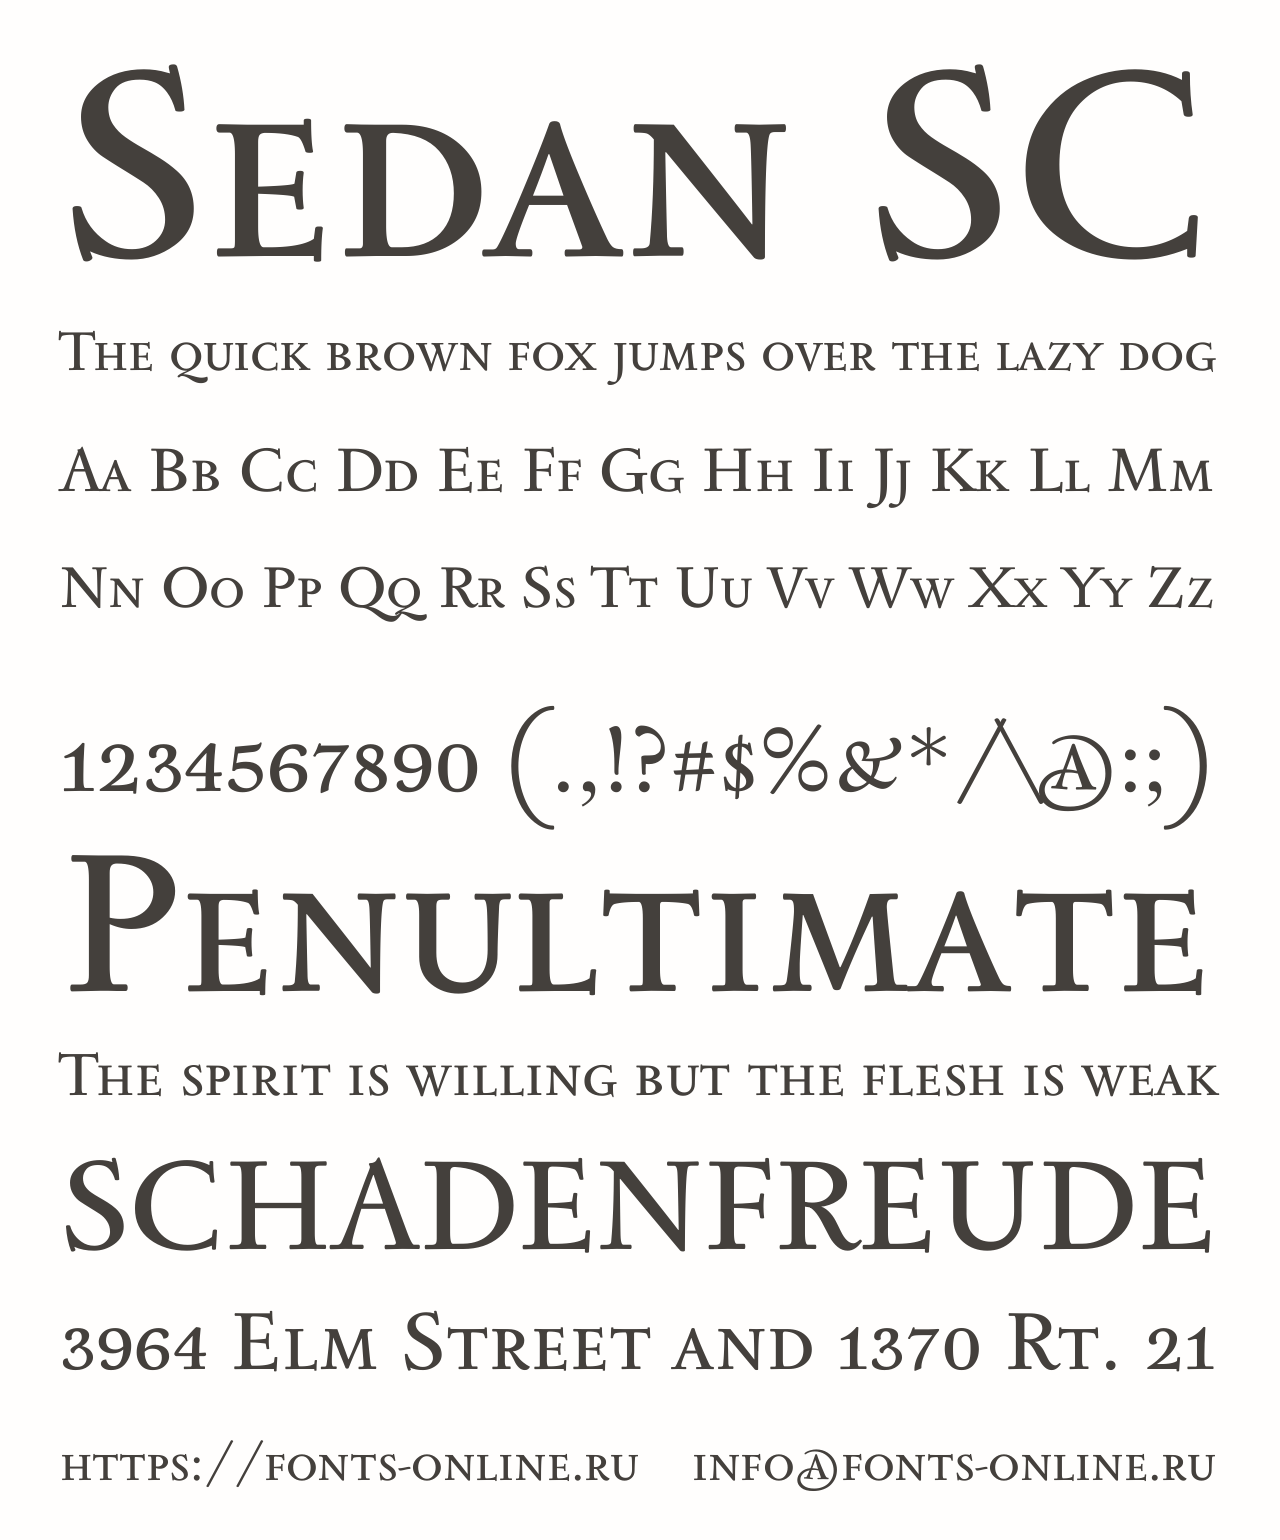 Sedan SC Font